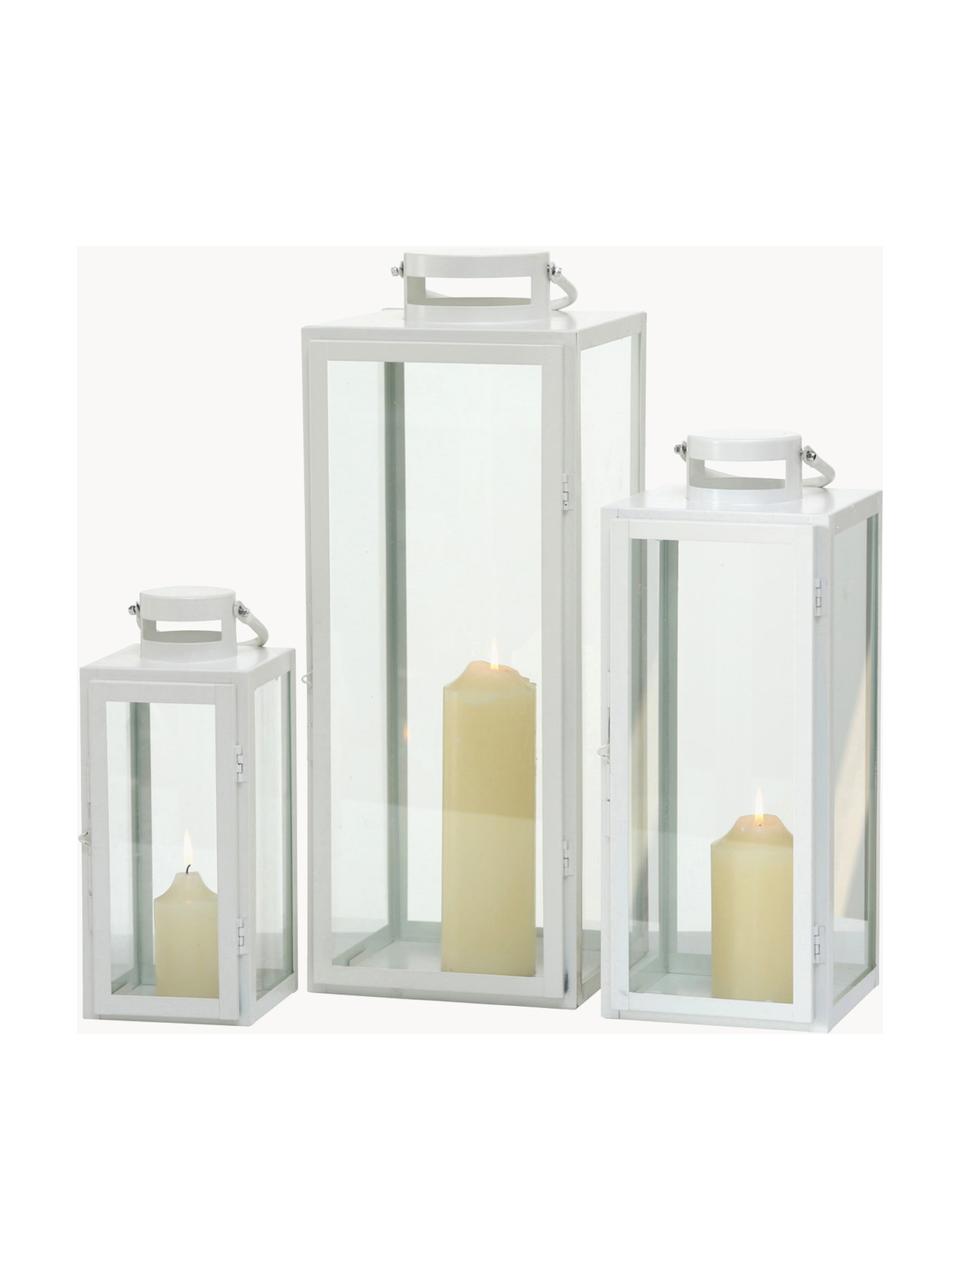 Komplet latarenek ze szkła Arana, 3 elem., Szkło, metal powlekany, Biały, transparentny, Komplet z różnymi rozmiarami